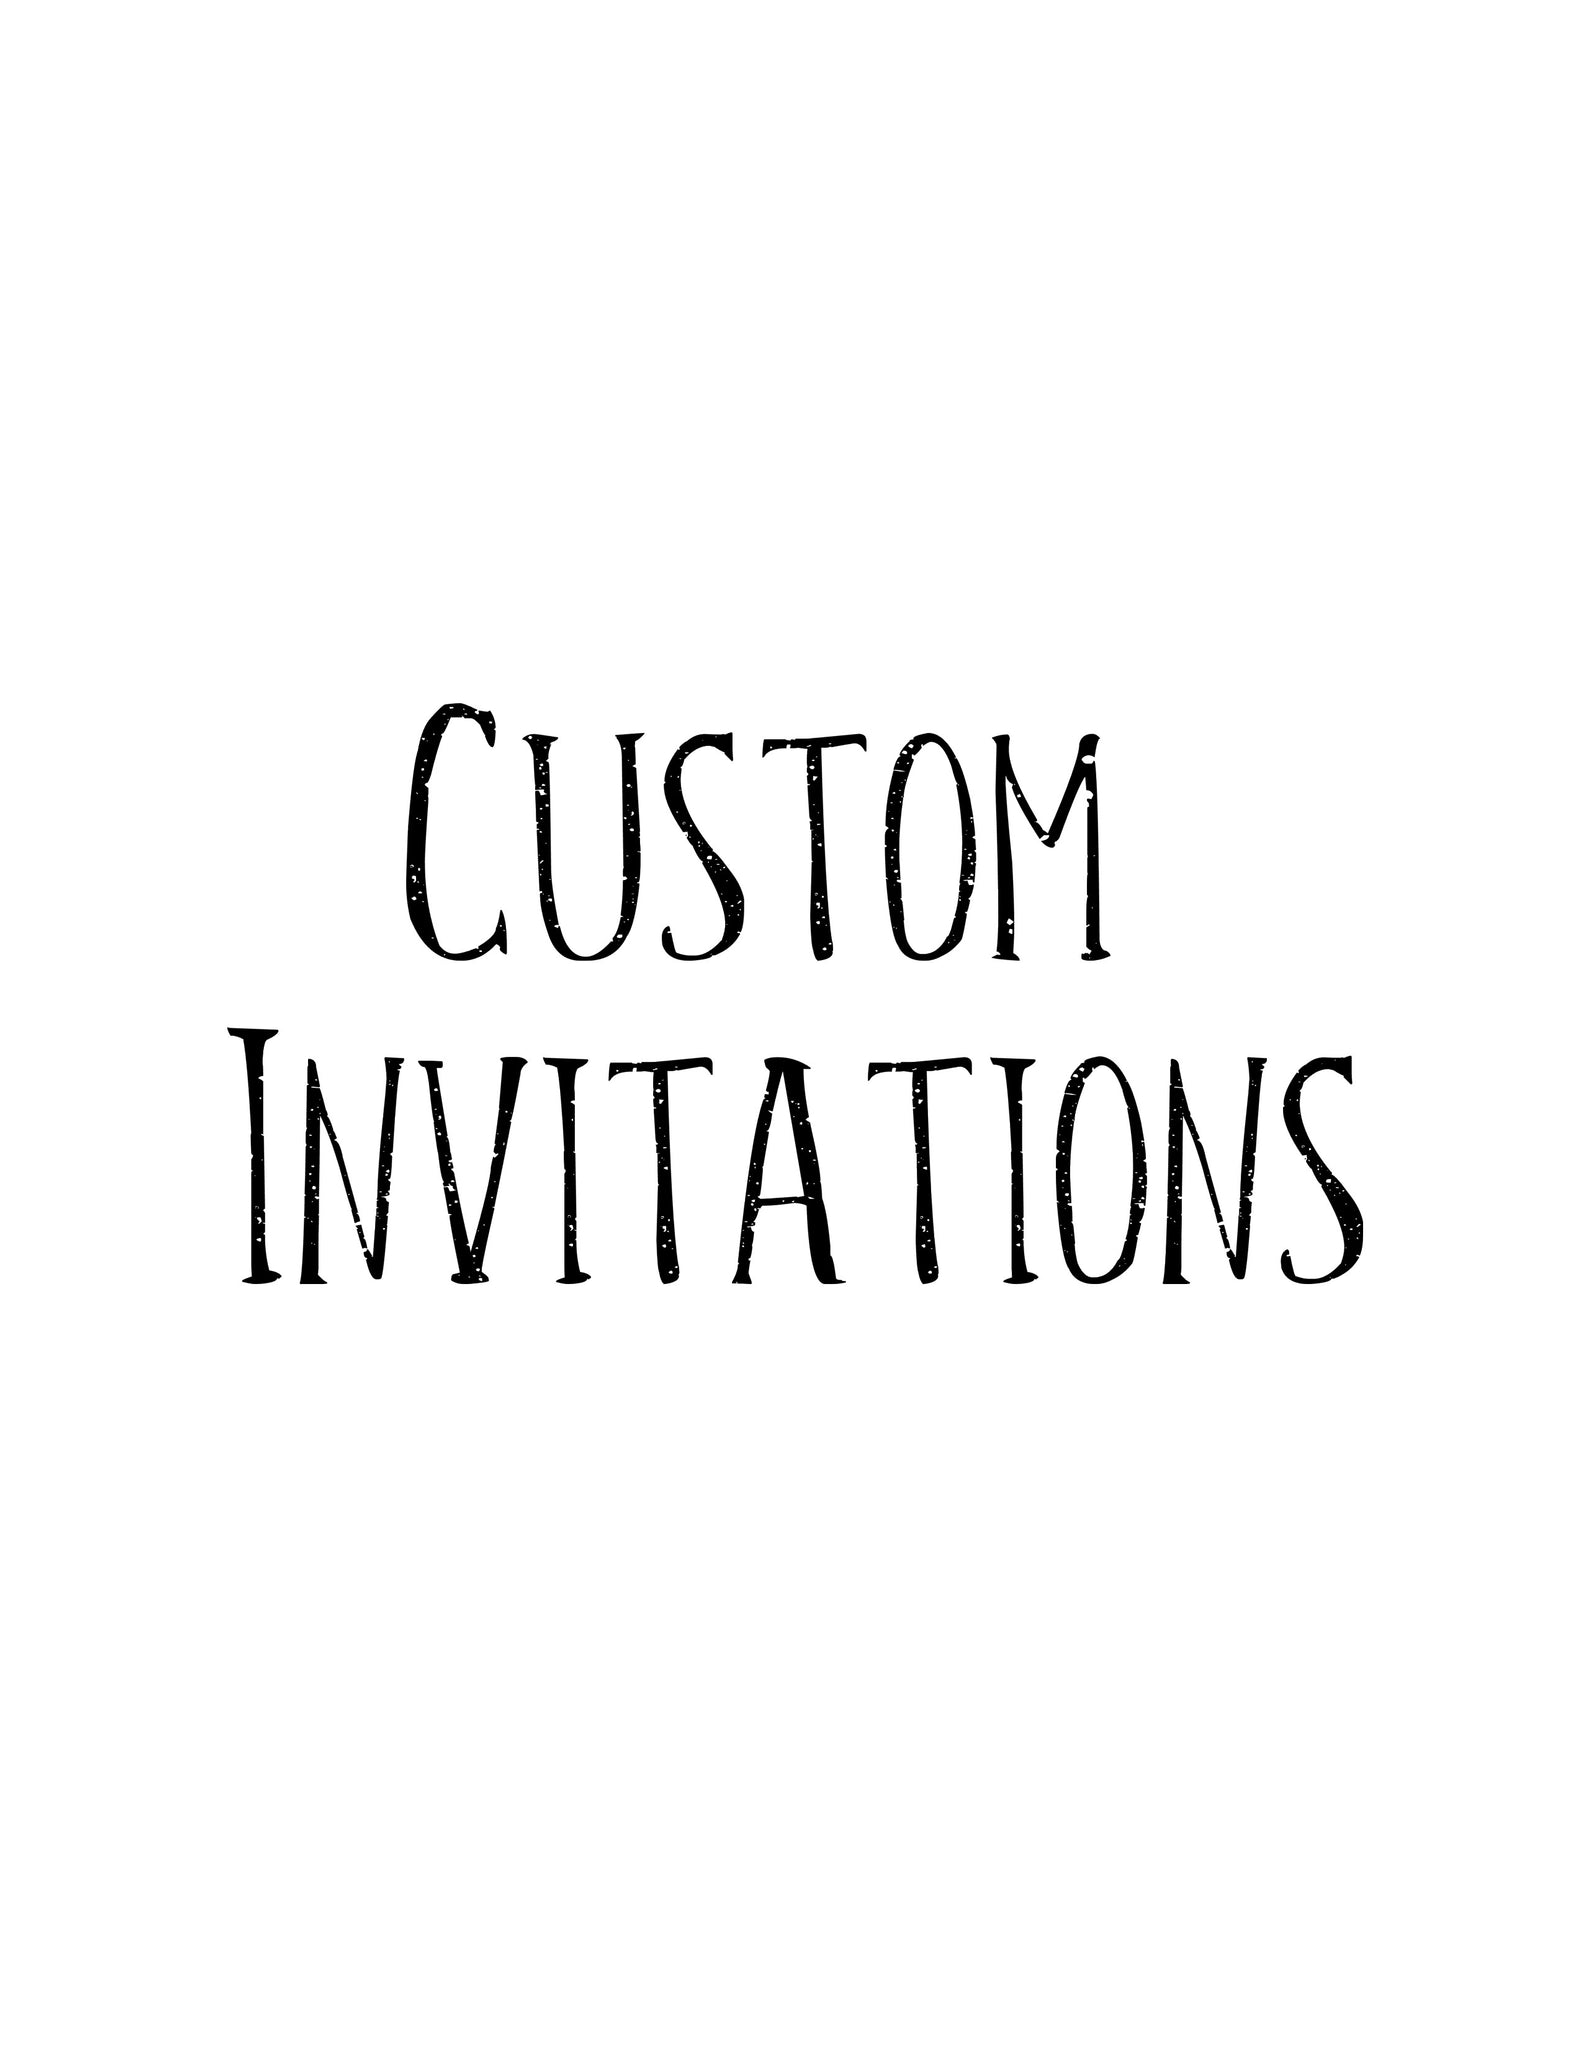 Custom Invitations (Please Contact)